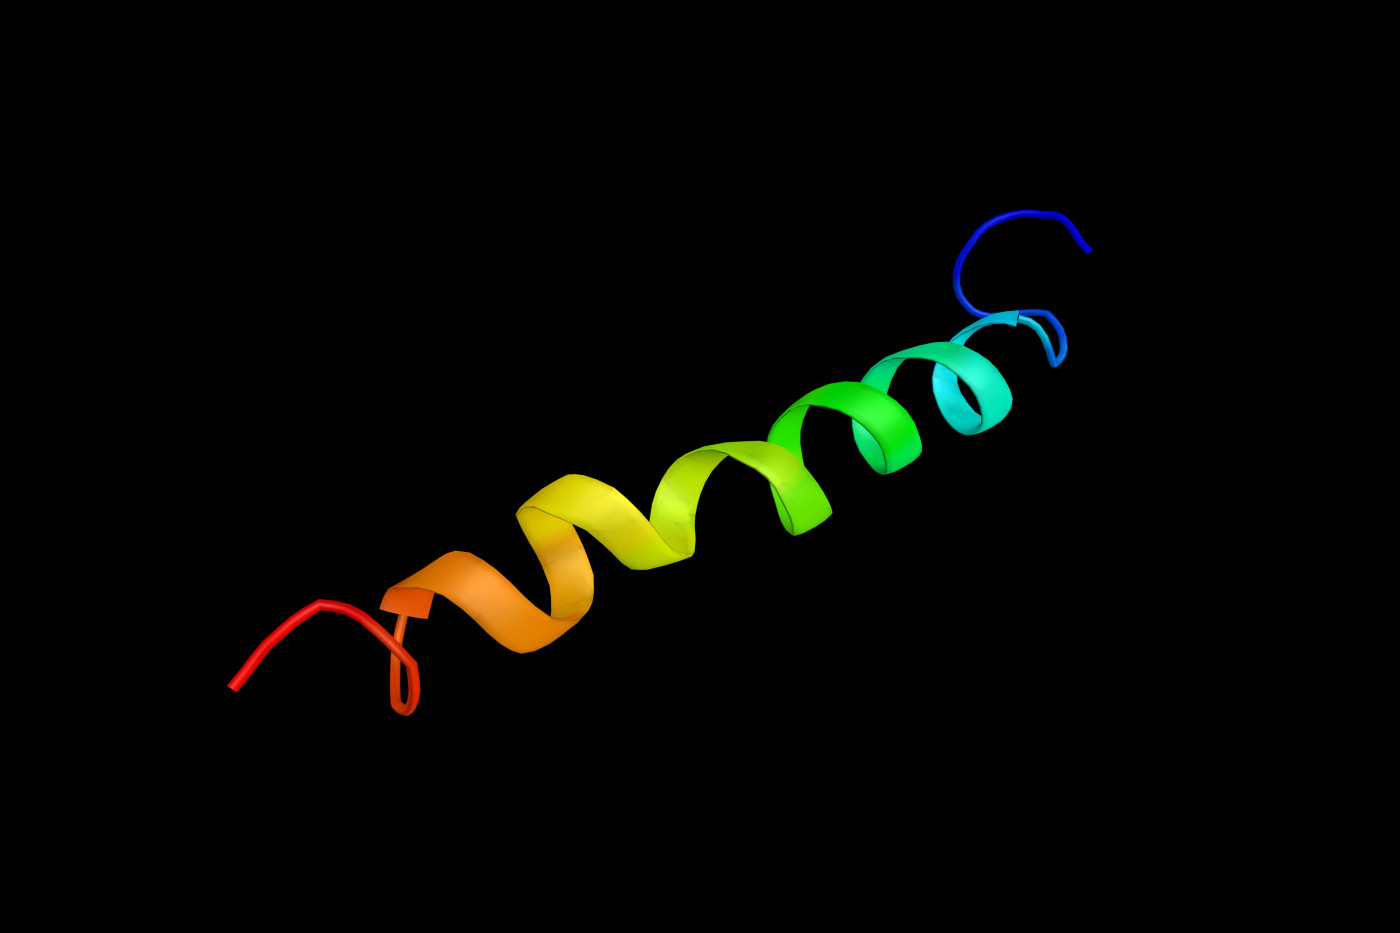 TDP-43 protein work